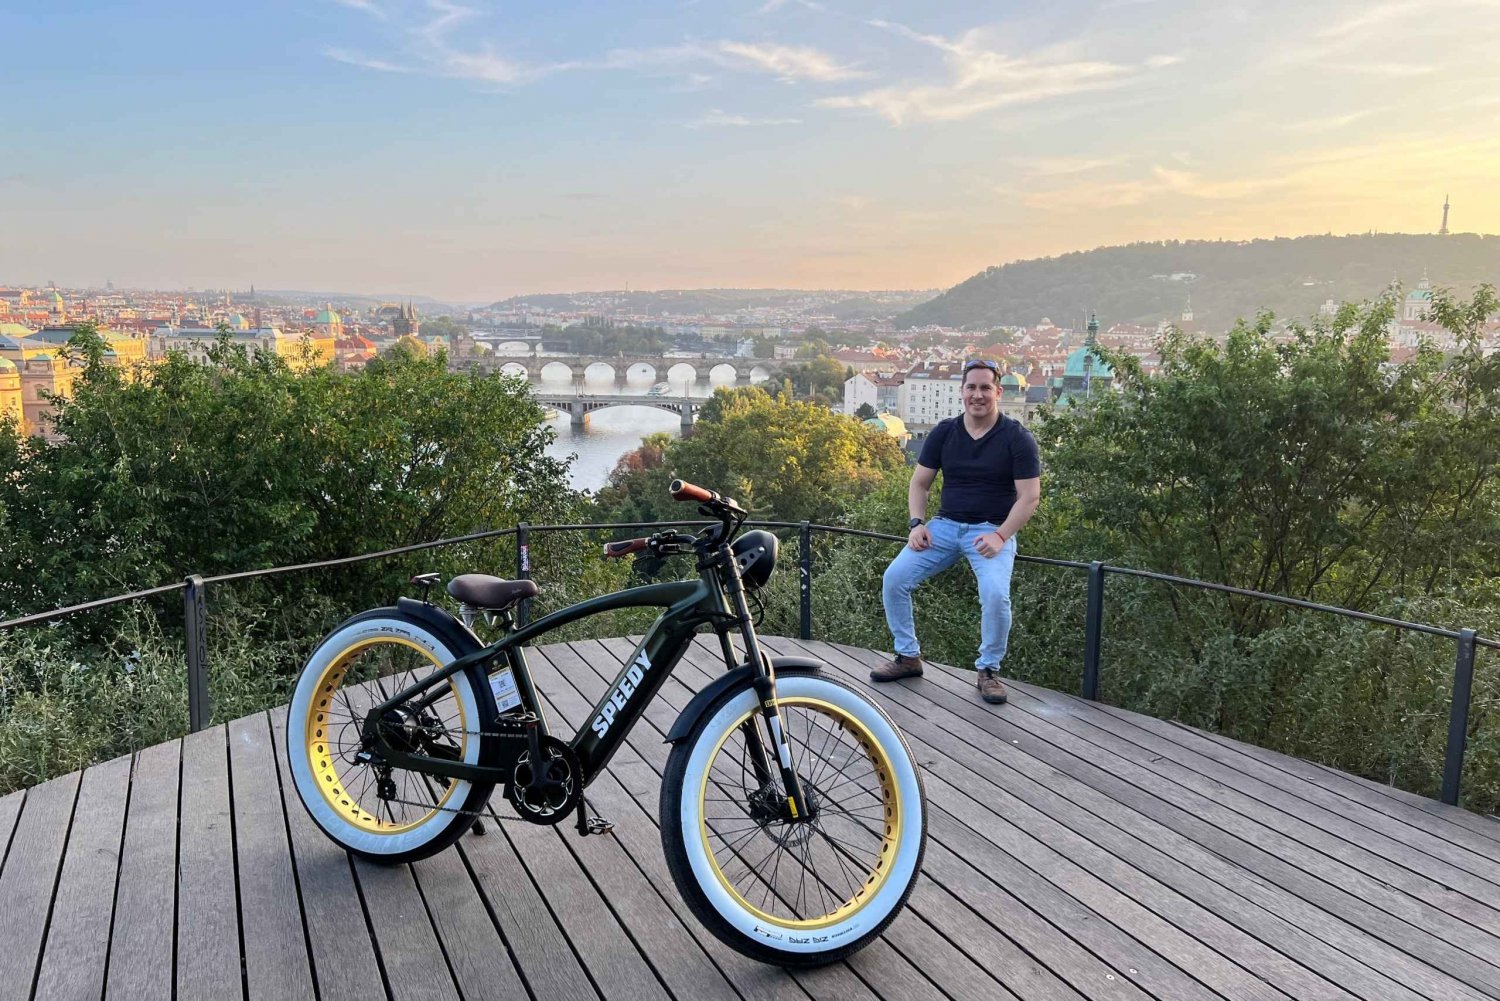 Grand City Tour of Prague on Stylish Retro Styled E-Bike